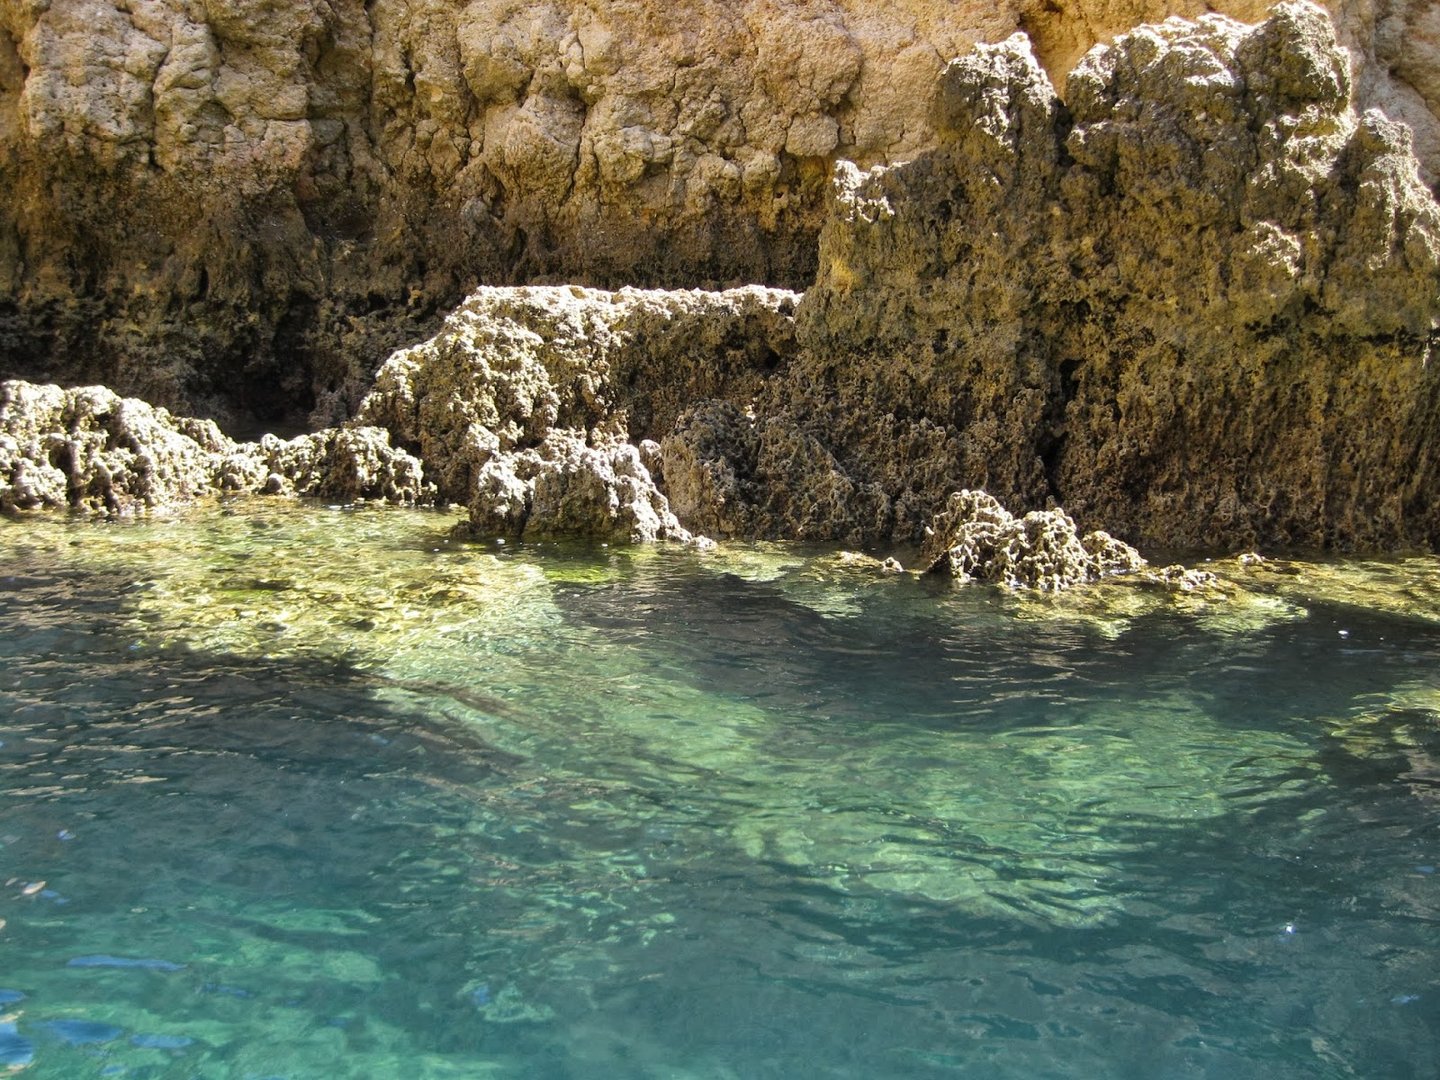 Grotten vor Lagos (Algarve) 2